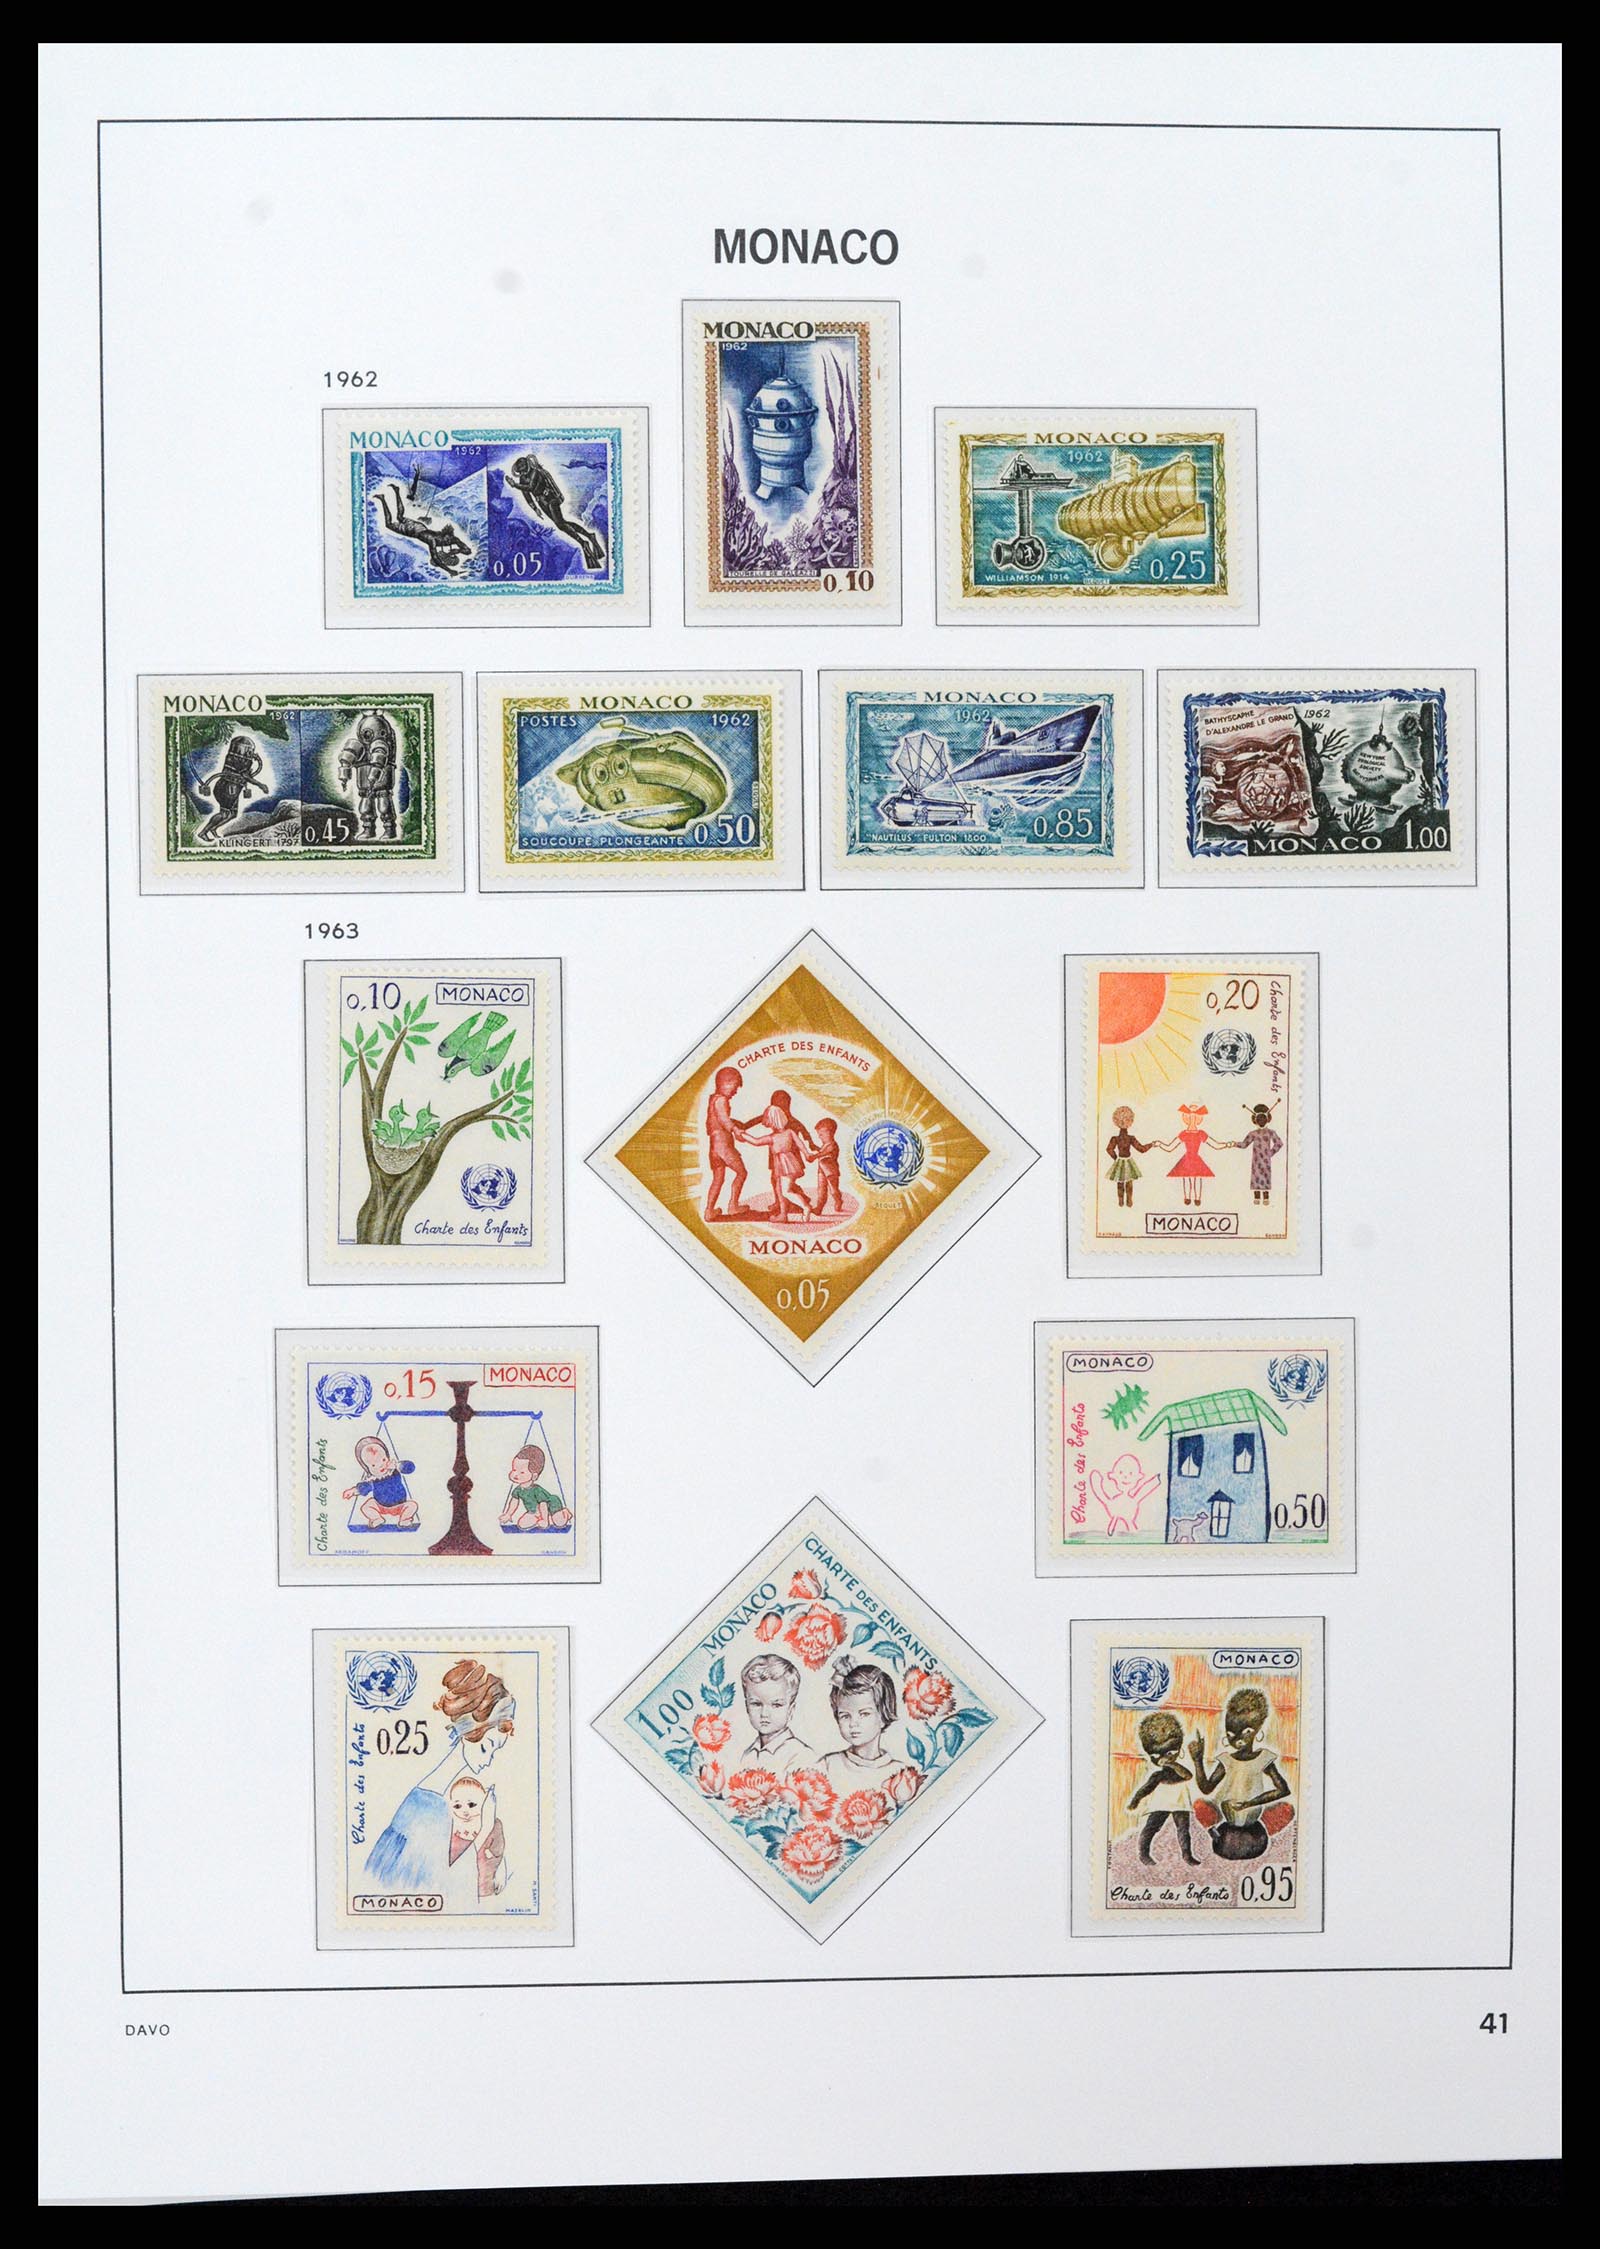 37279 041 - Stamp collection 37279 Monaco 1885-1969.